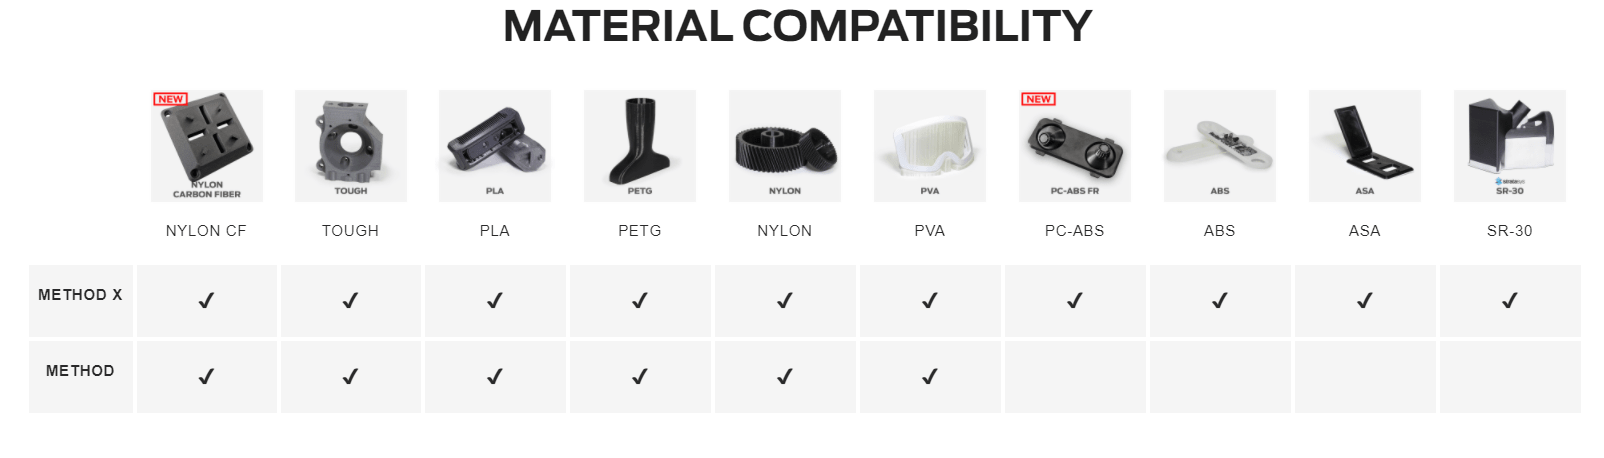 Stratasys Material compatibility